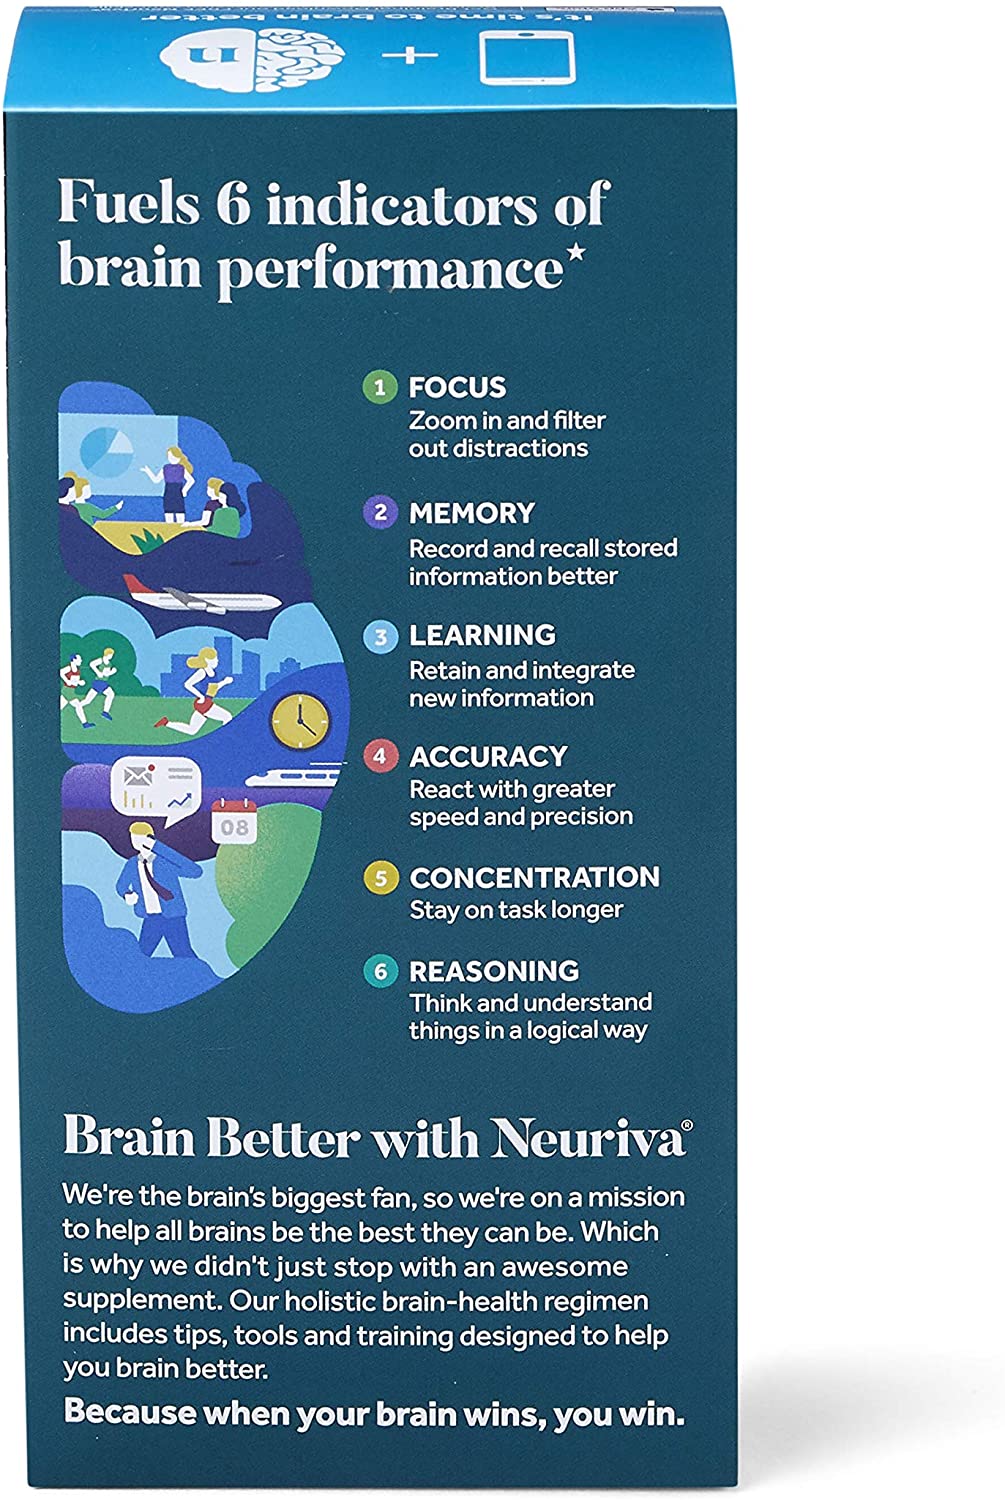 Neuriva Plus Brain Performance 30 capsules